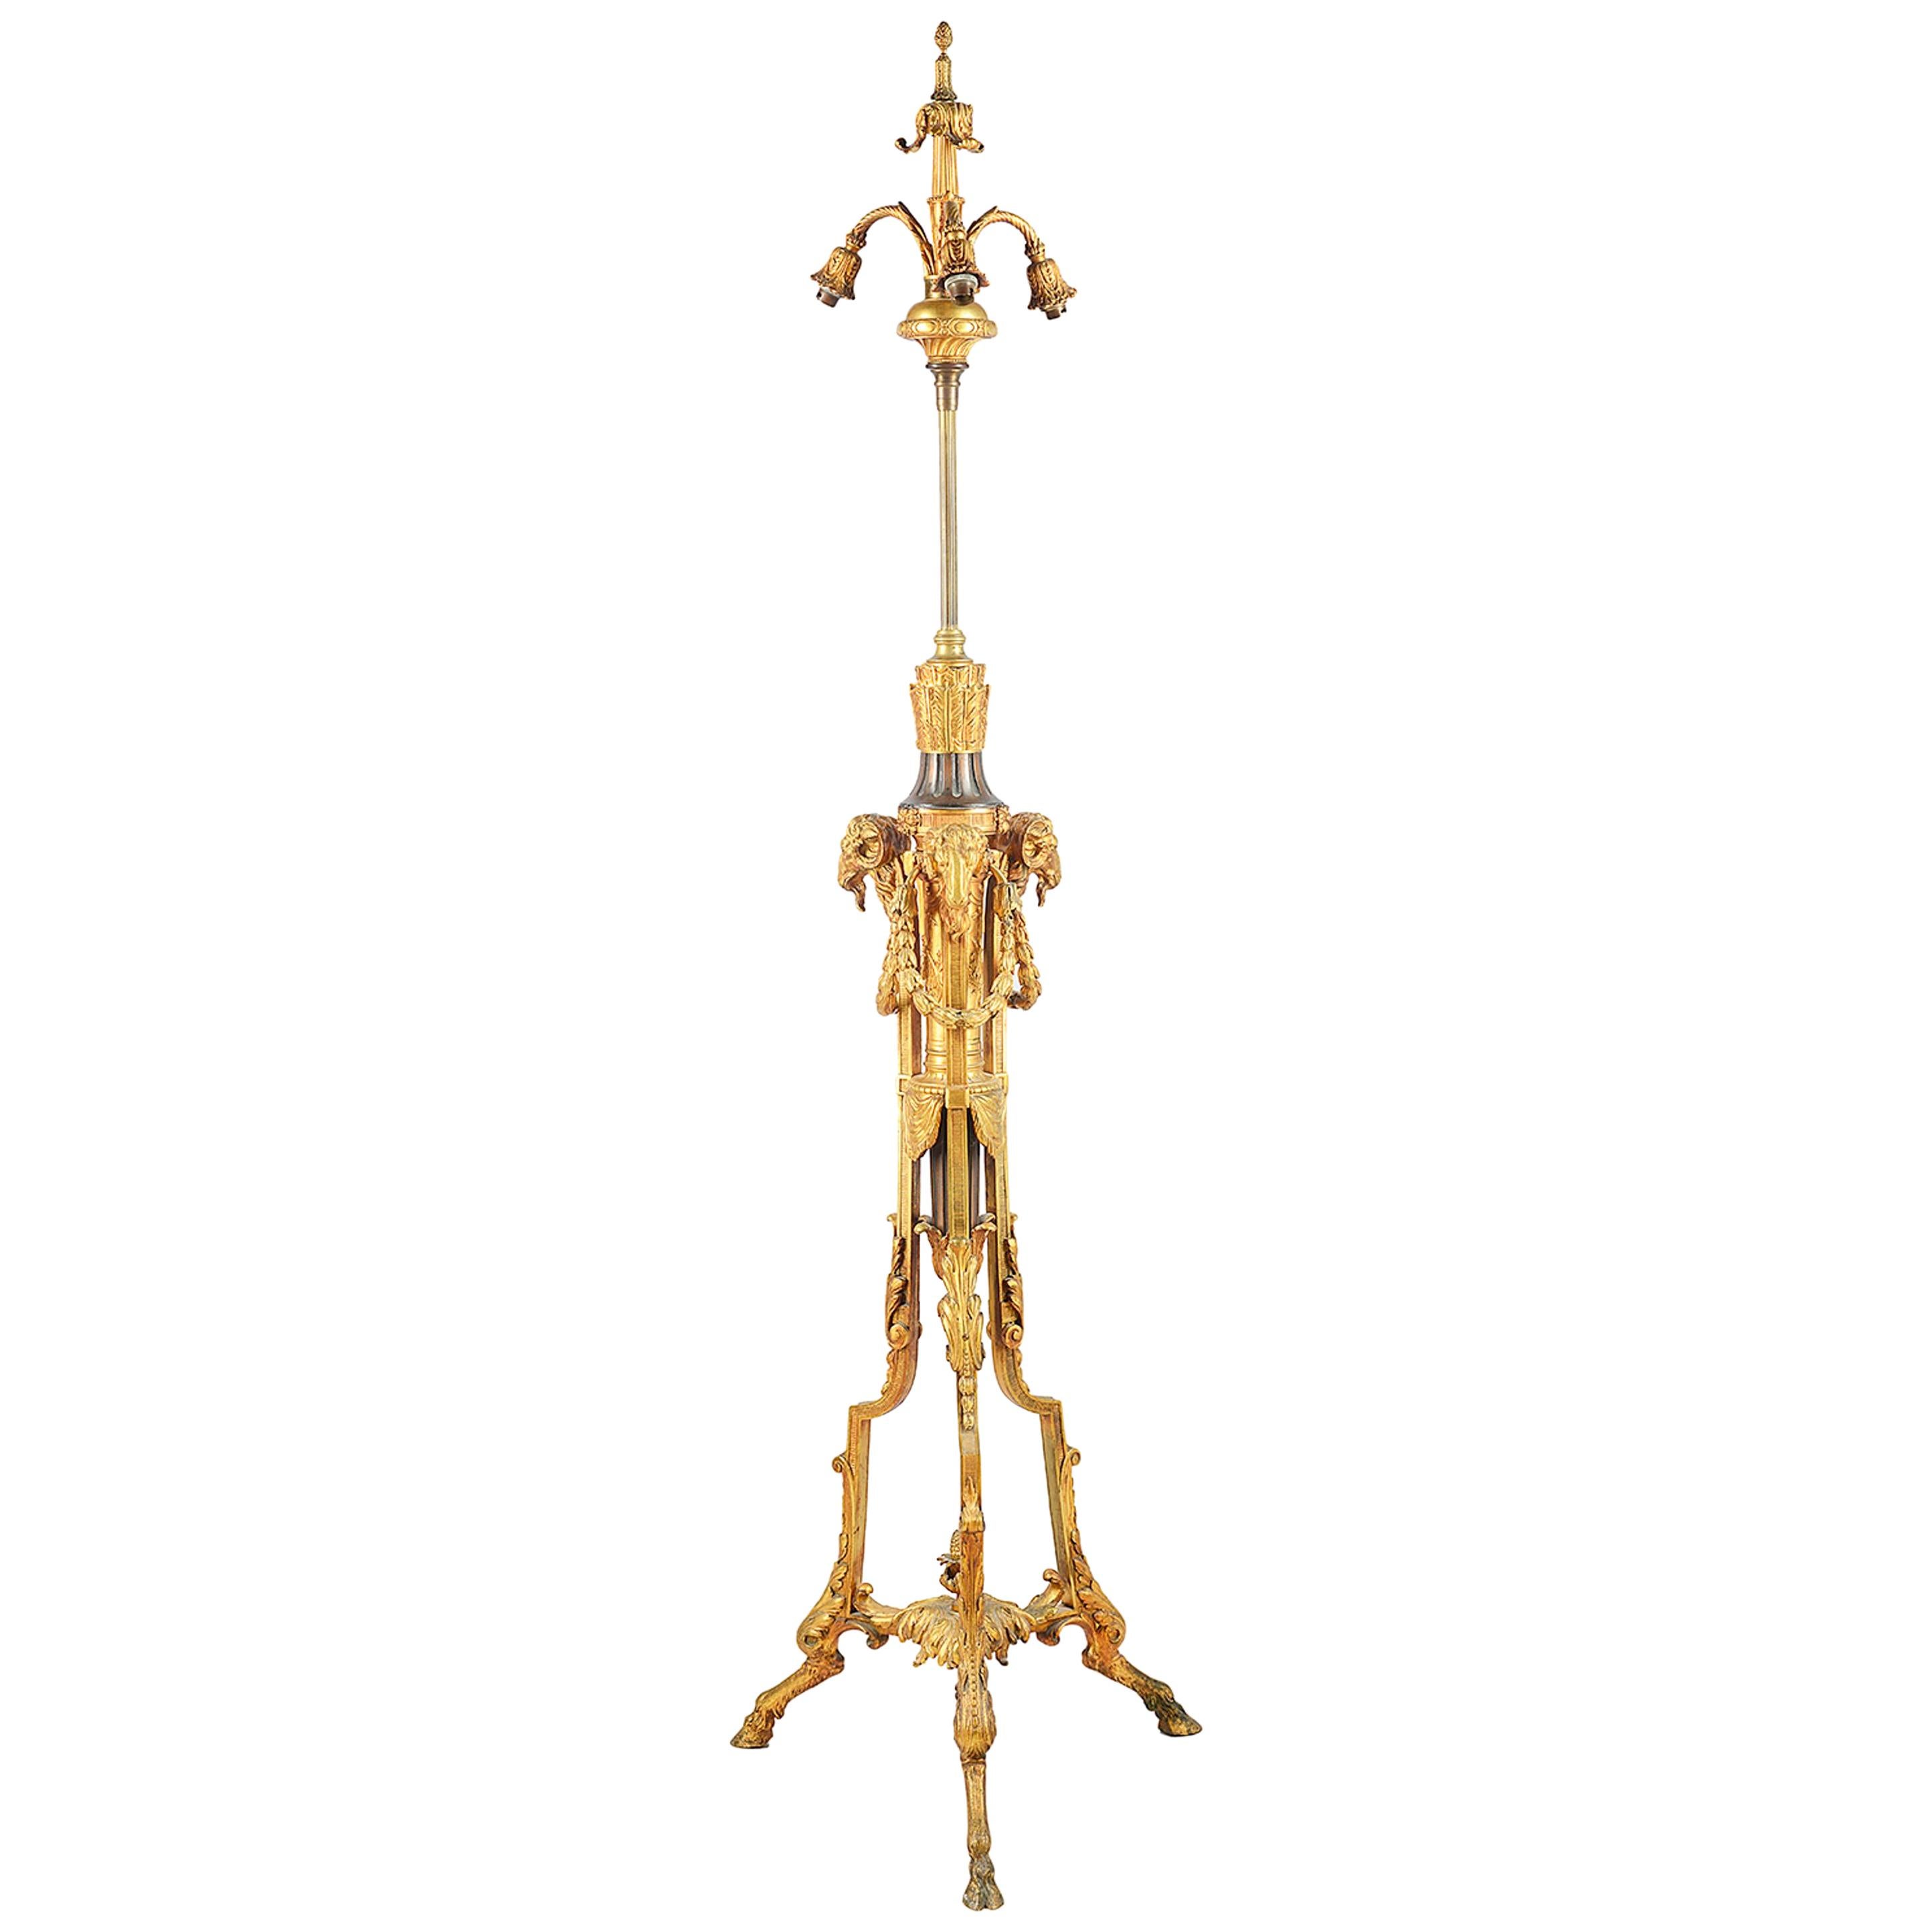 Klassische Goldbronze-Standardlampe des späten 19. Jahrhunderts